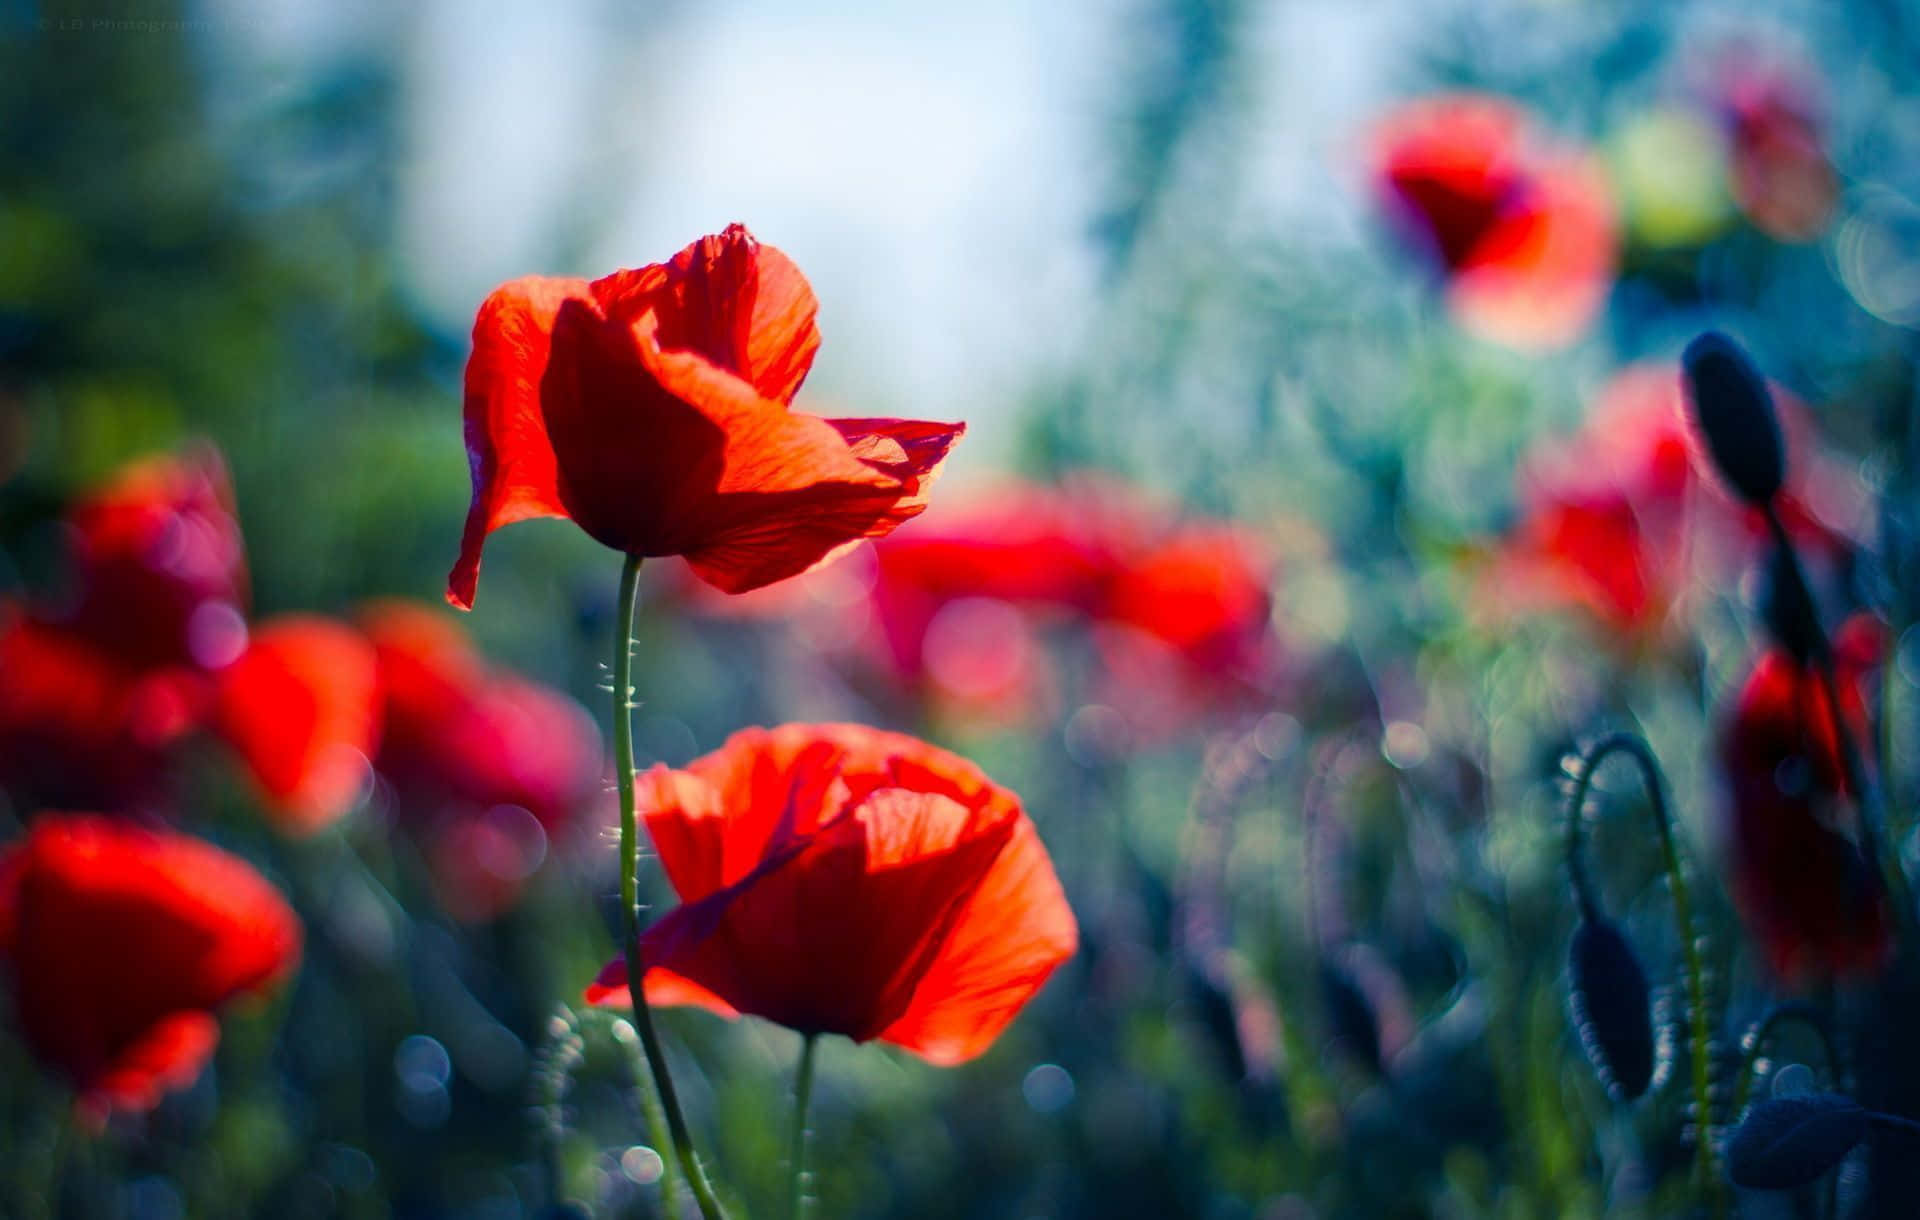 Poppy, a symbol of remembrance